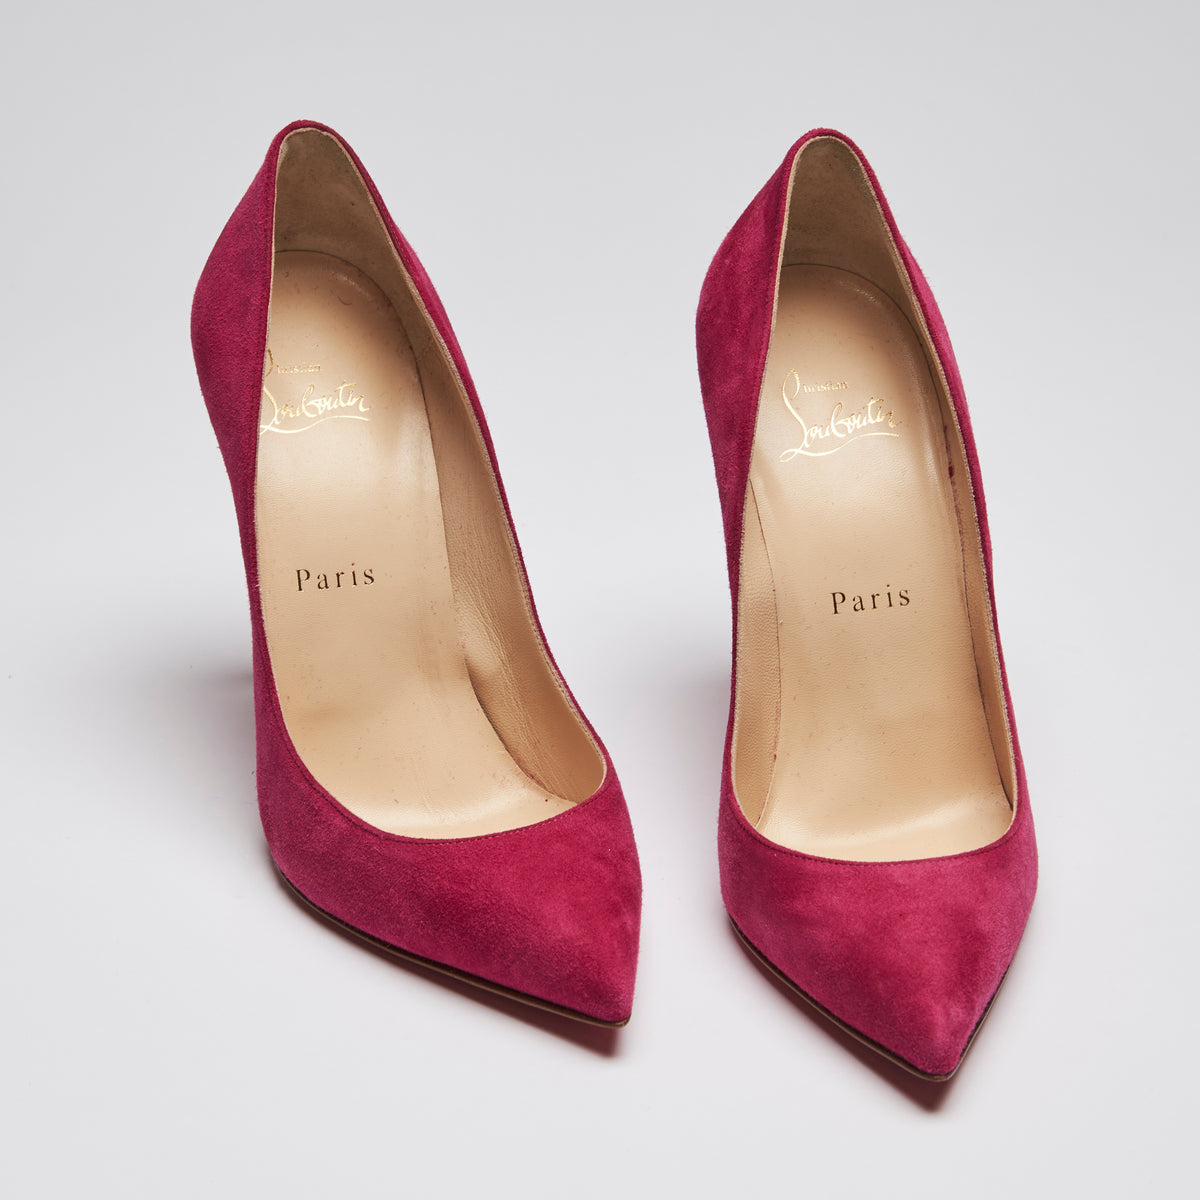 Excellent Pre-Loved Velvet Heels in Various Colors.  (magenta pink, front)